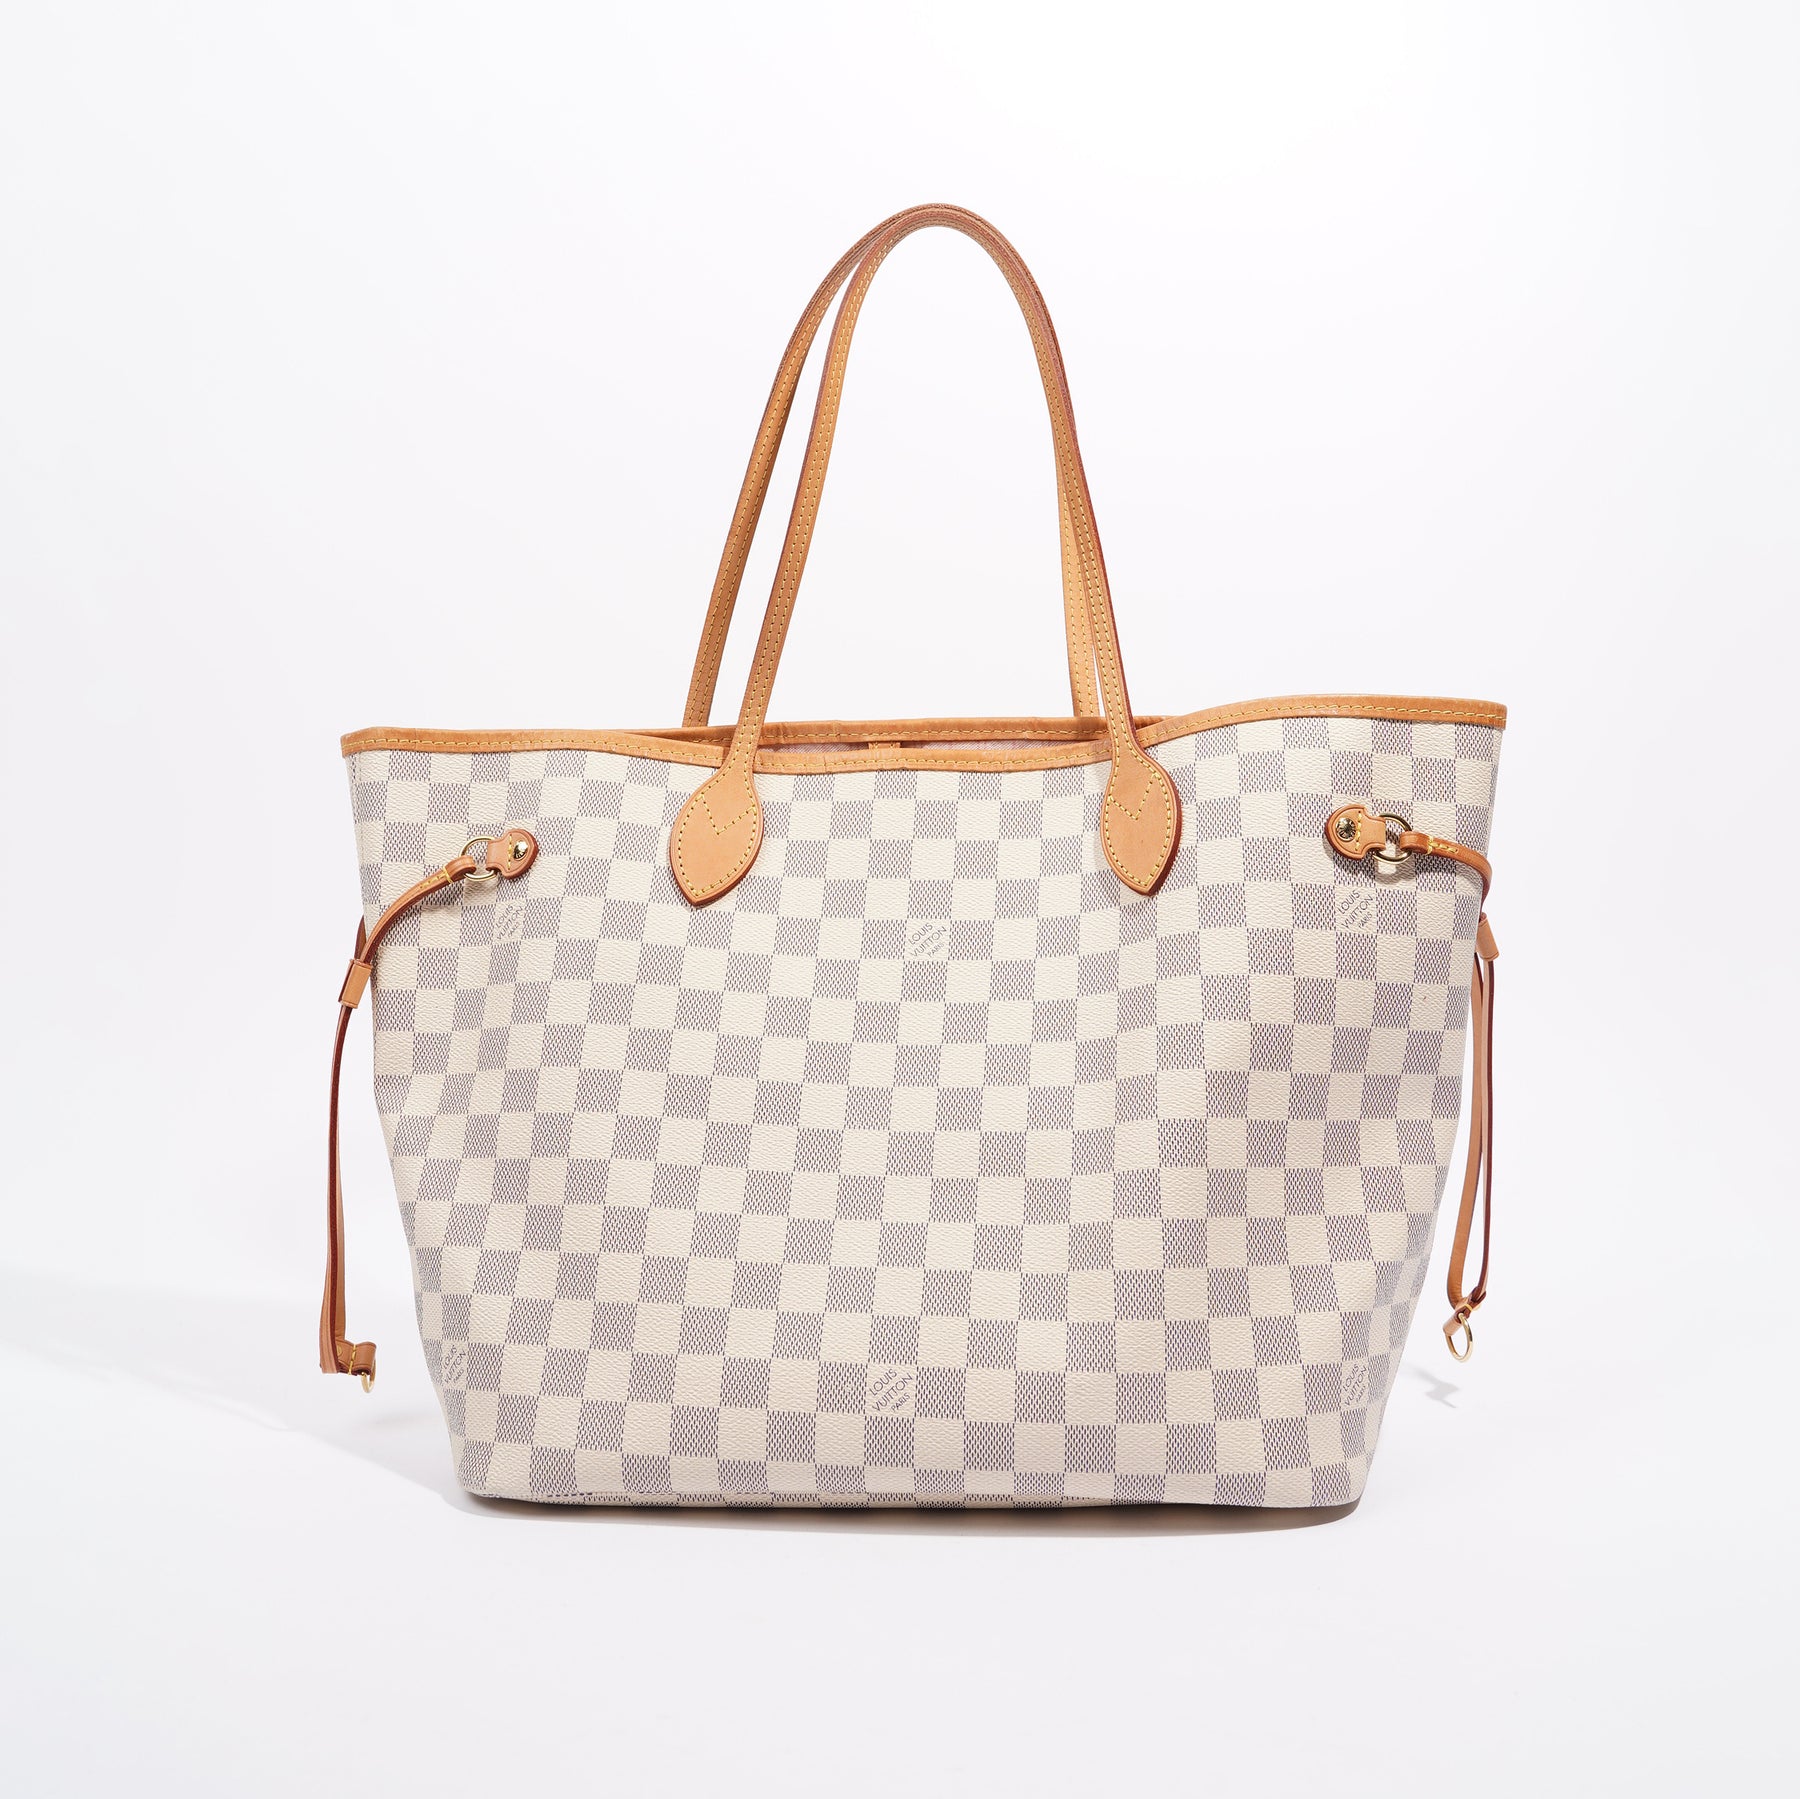 Louis Vuitton Neverfull mm Damier Azur Shoulder Bag White